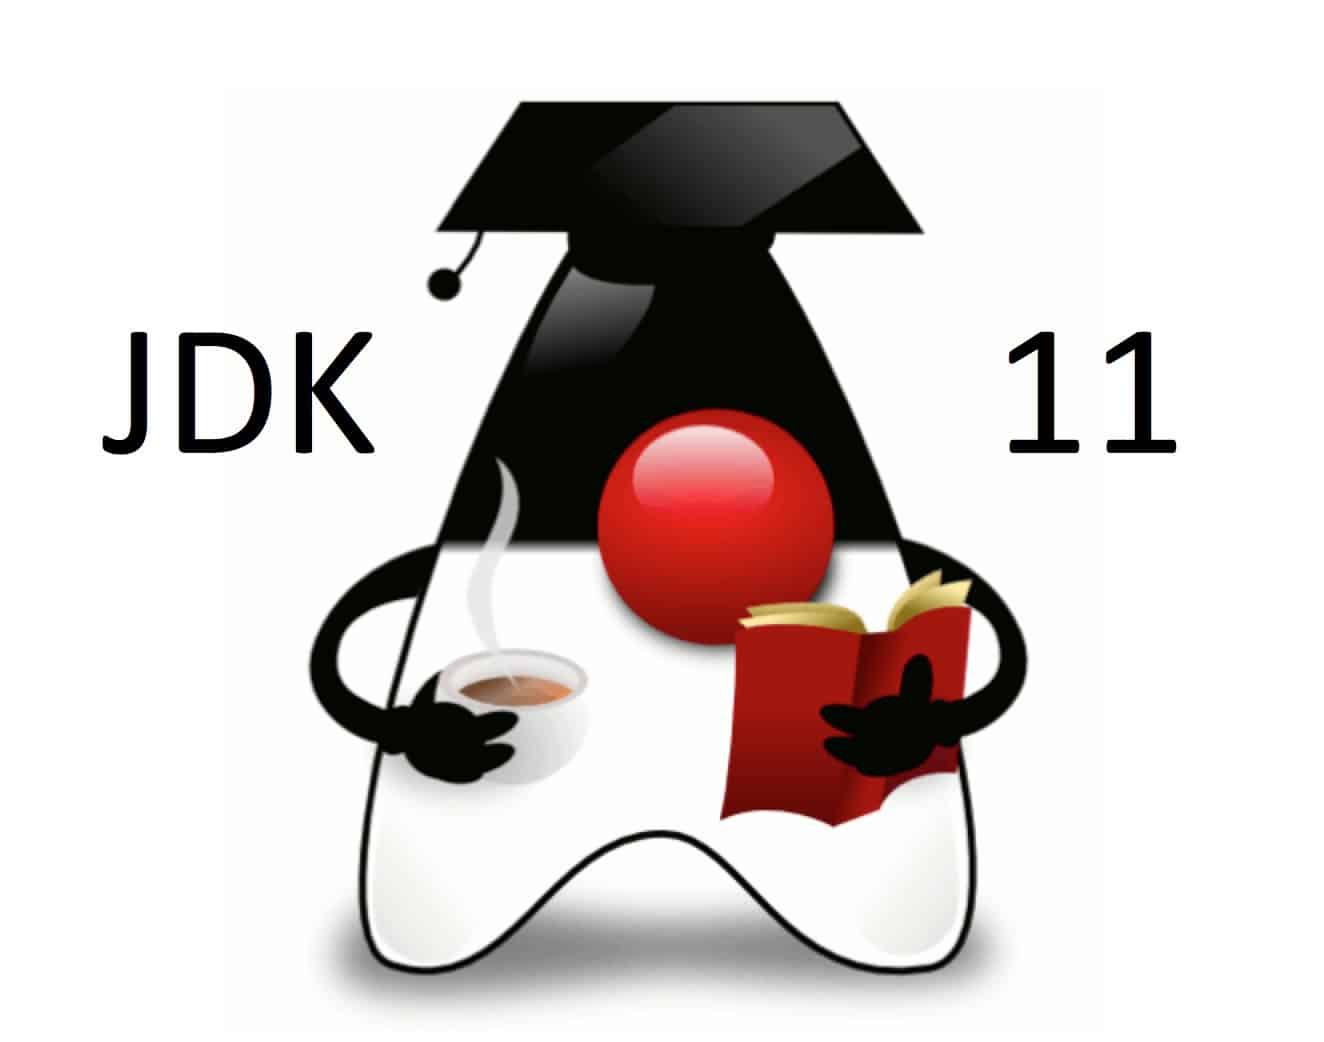 jdk 11 download